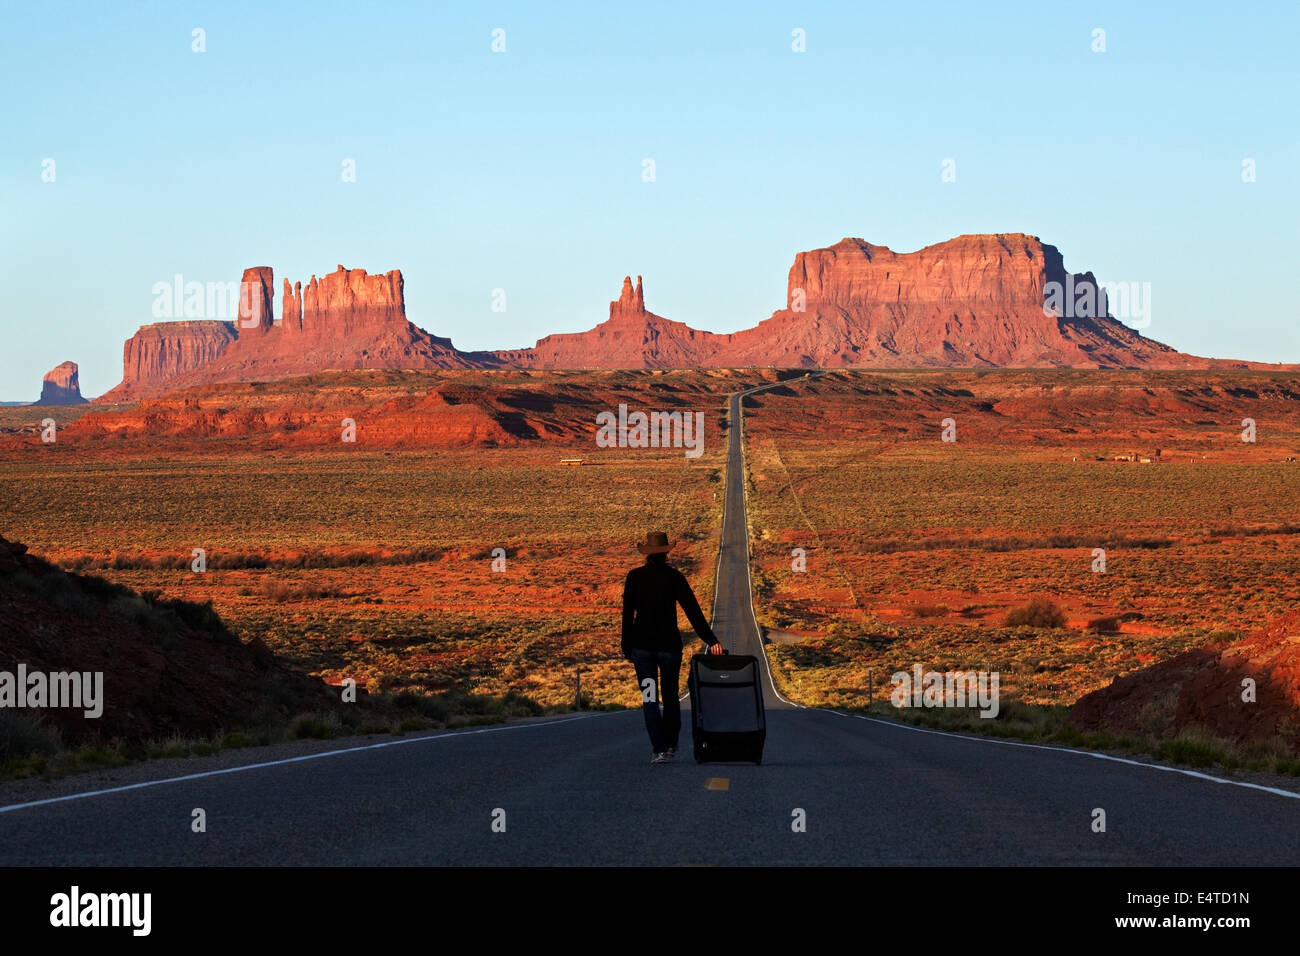 Woman with suitcase on U.S. Route 163 heading towards Monument Valley, Navajo Nation, Utah, near Arizona Border, USA Stock Photo